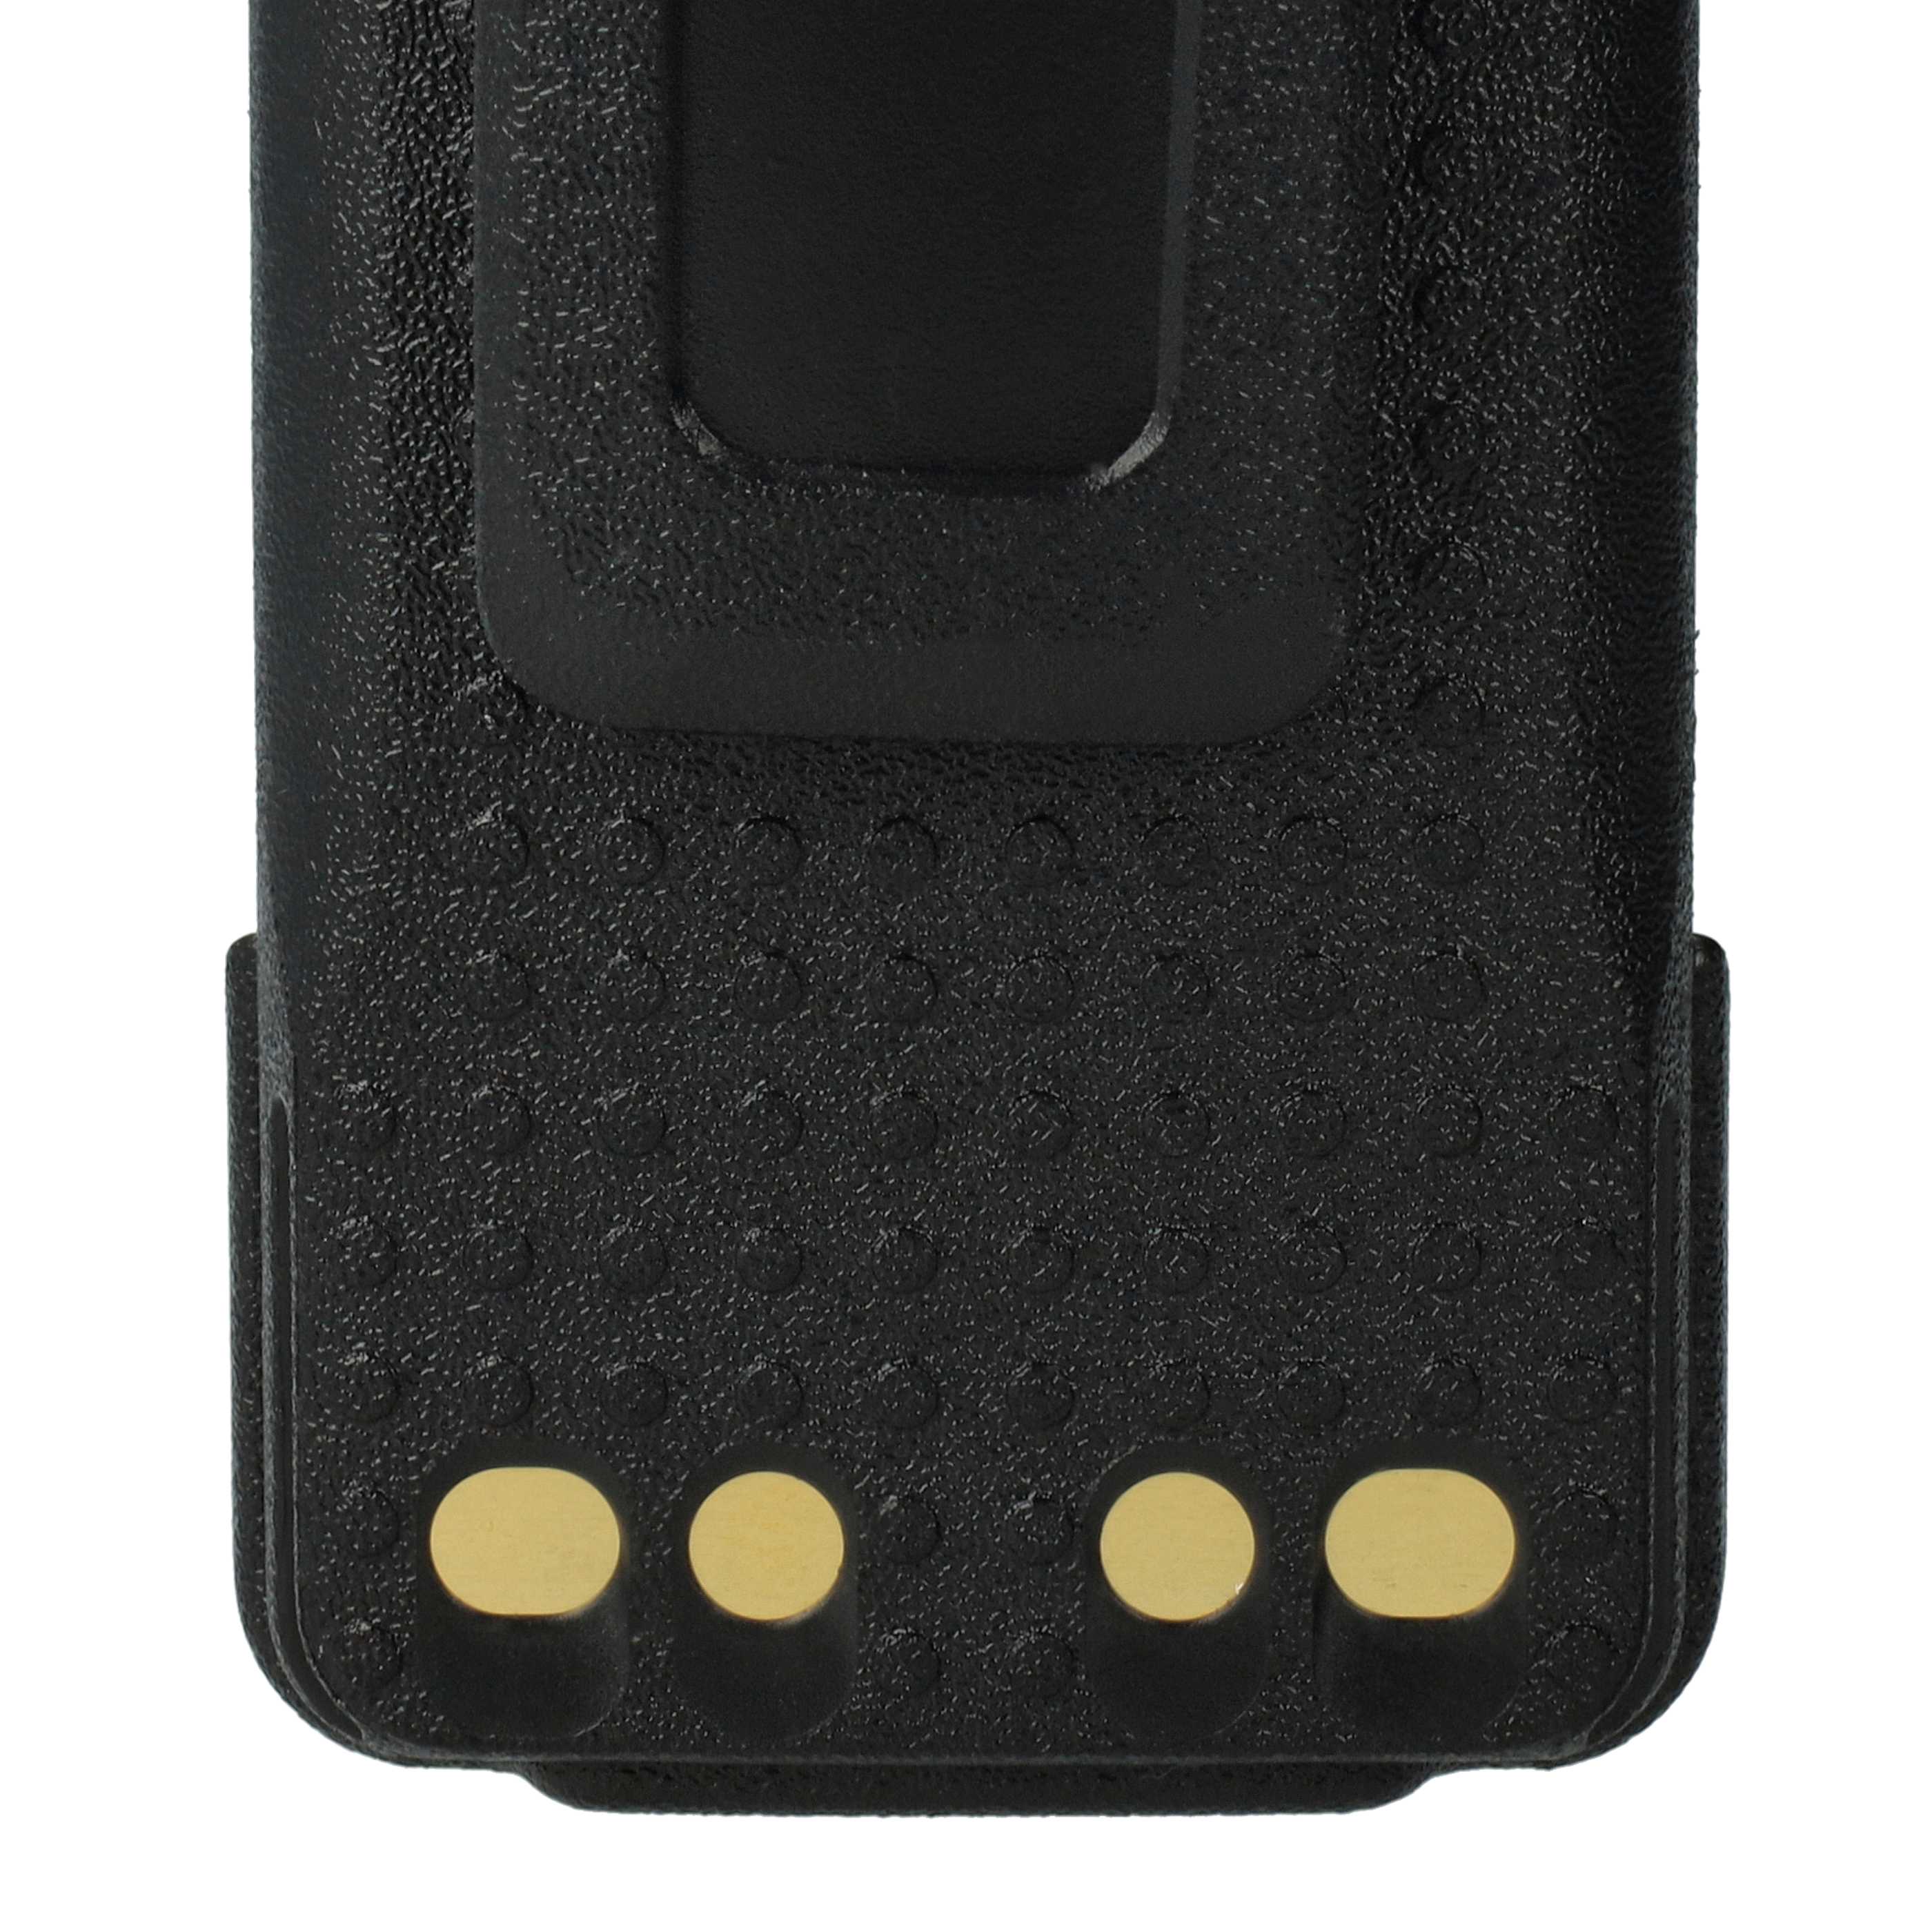 Batería reemplaza Motorola PMNN4406 para radio, walkie-talkie Motorola - 2200 mAh 7,4 V Li-Ion con clip